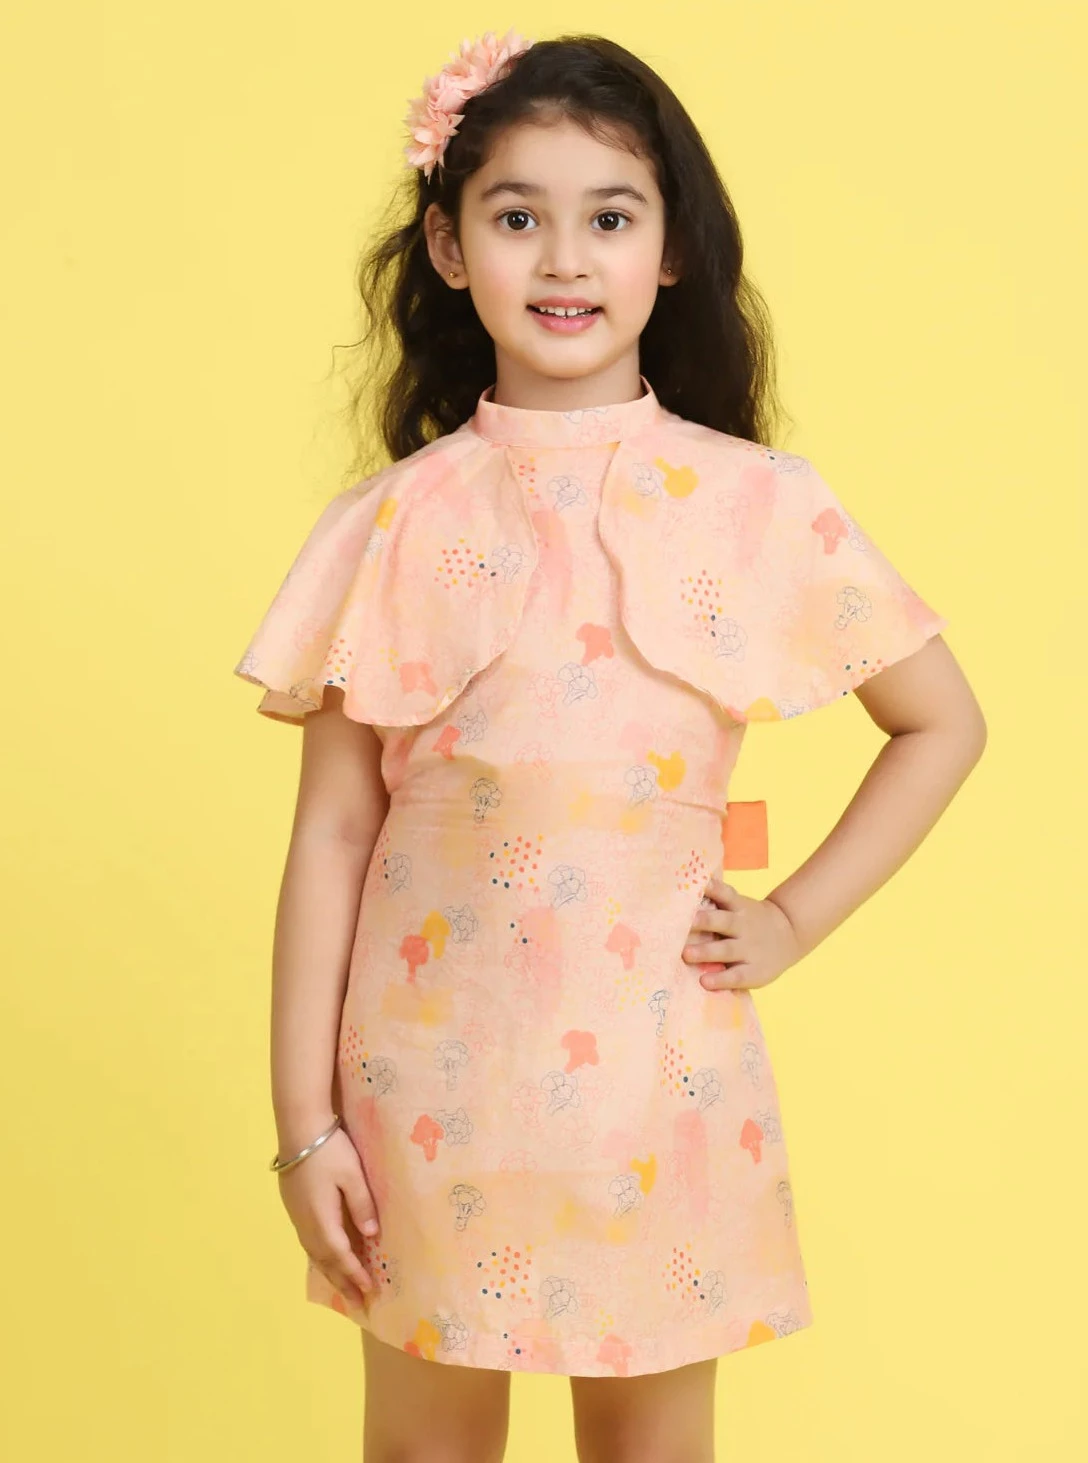 MMIKO LOLO Blush Broccoli Halter Dress in Organic Cotton | kids Fashion | The Green Collective SG